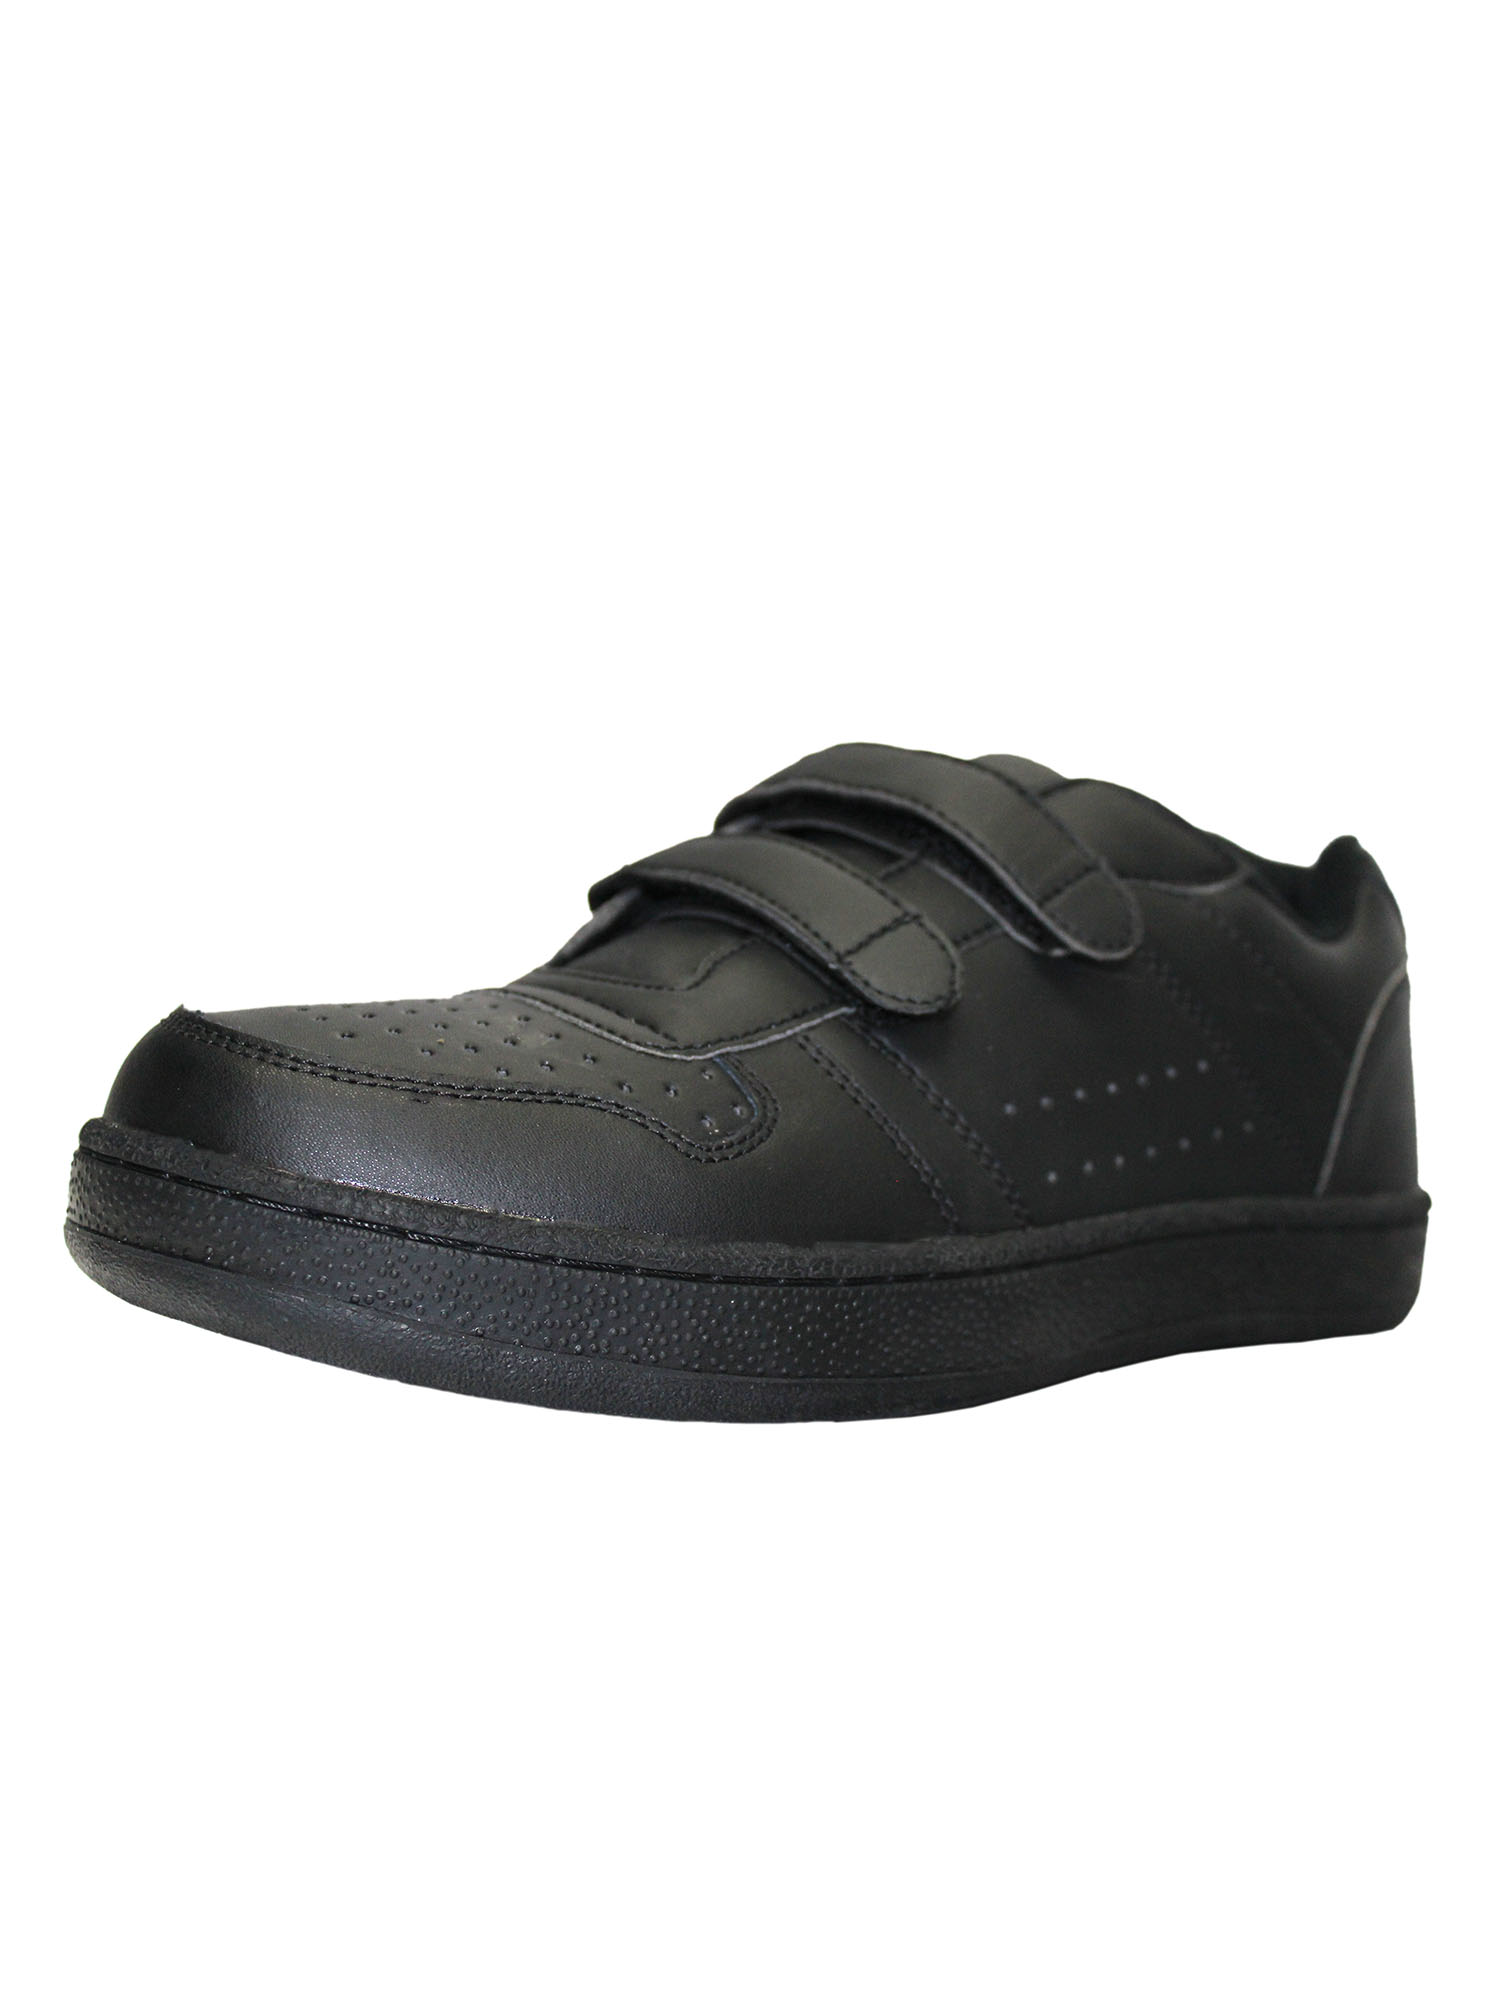 Tanleewa Men's Leather Strap Sneakers Lightweight Hook and Loop Walking Shoe Size 7 Adult Male - image 1 of 4